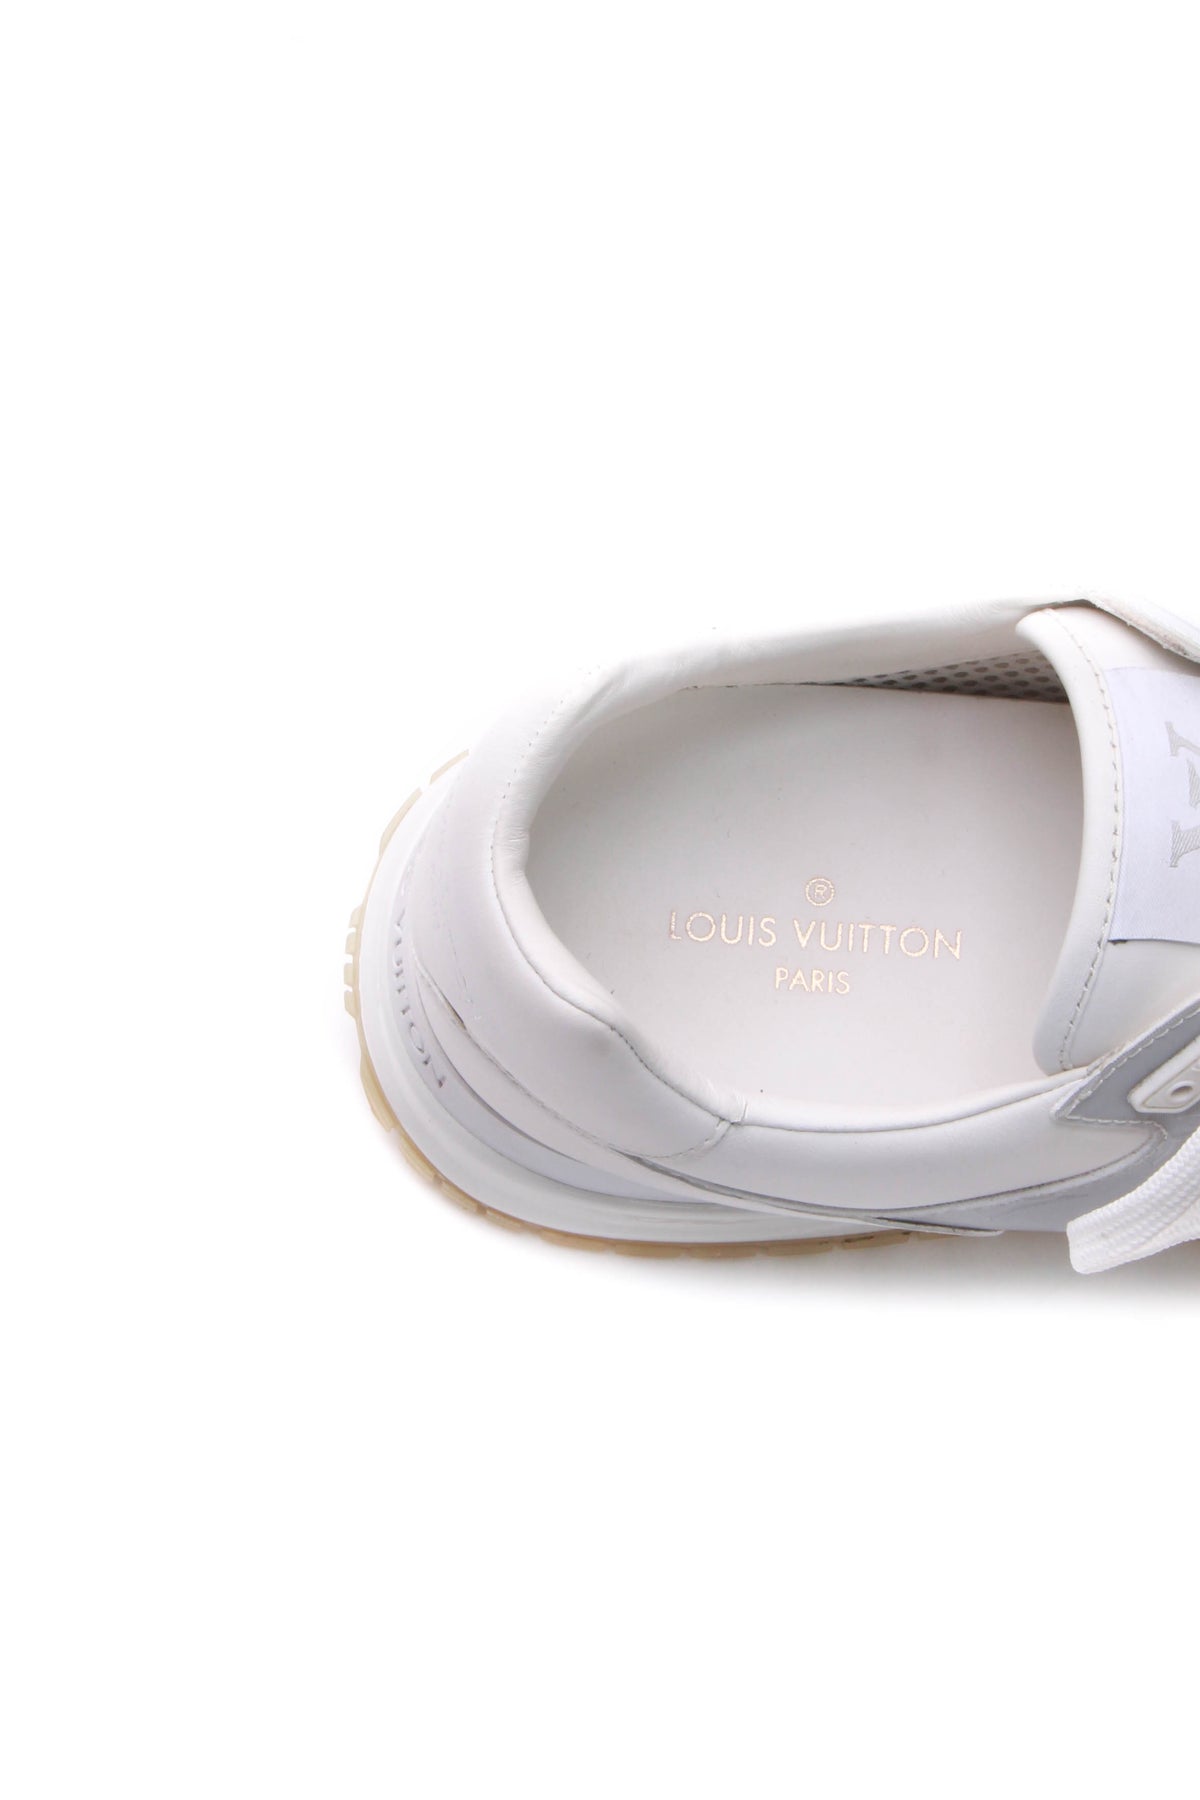 Louis Vuitton Run Away White Iridescent for Men